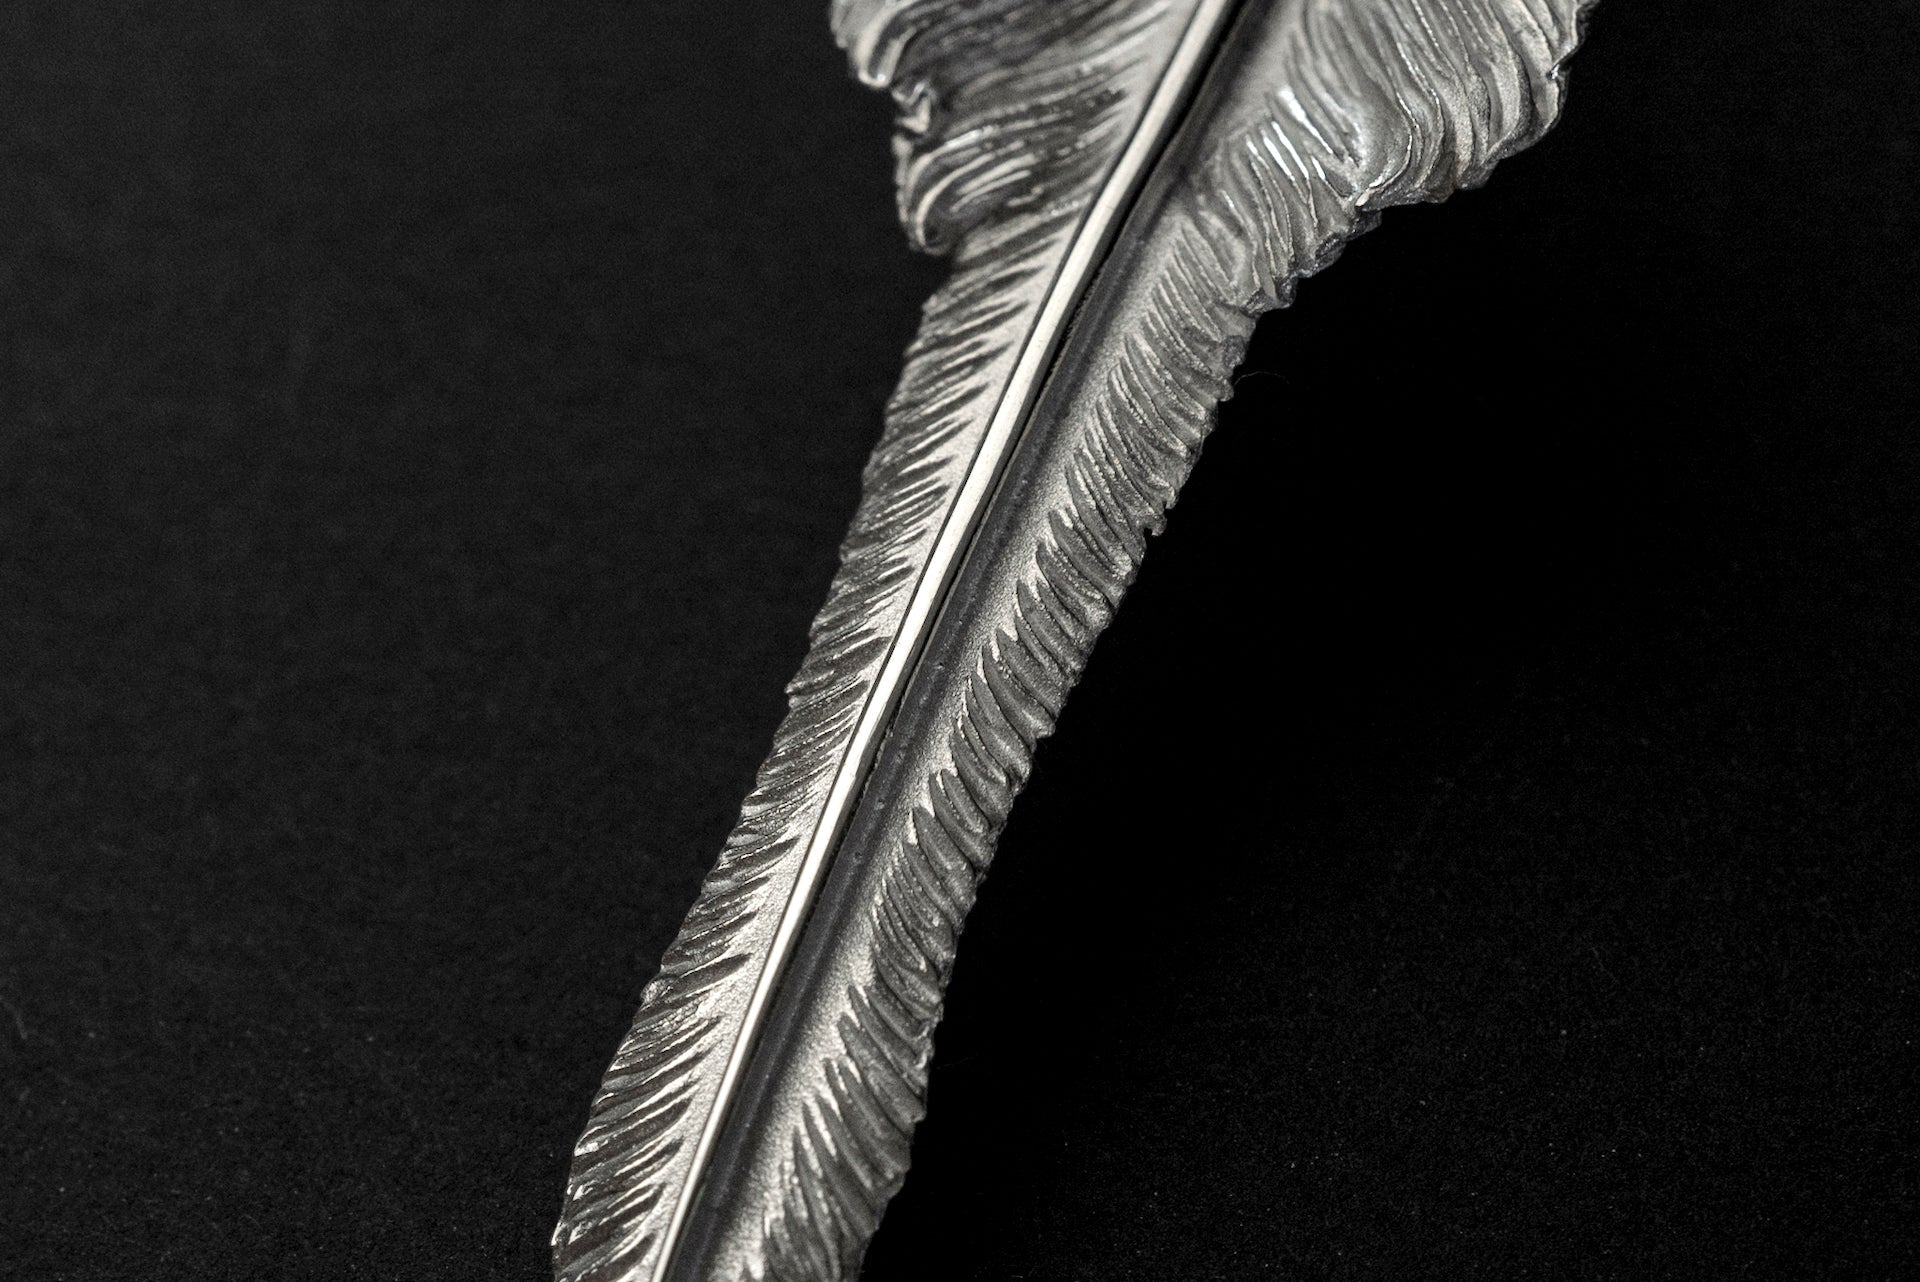 Legend Size Small "Spiritual Feather" Silver Pendant (P-165-S)